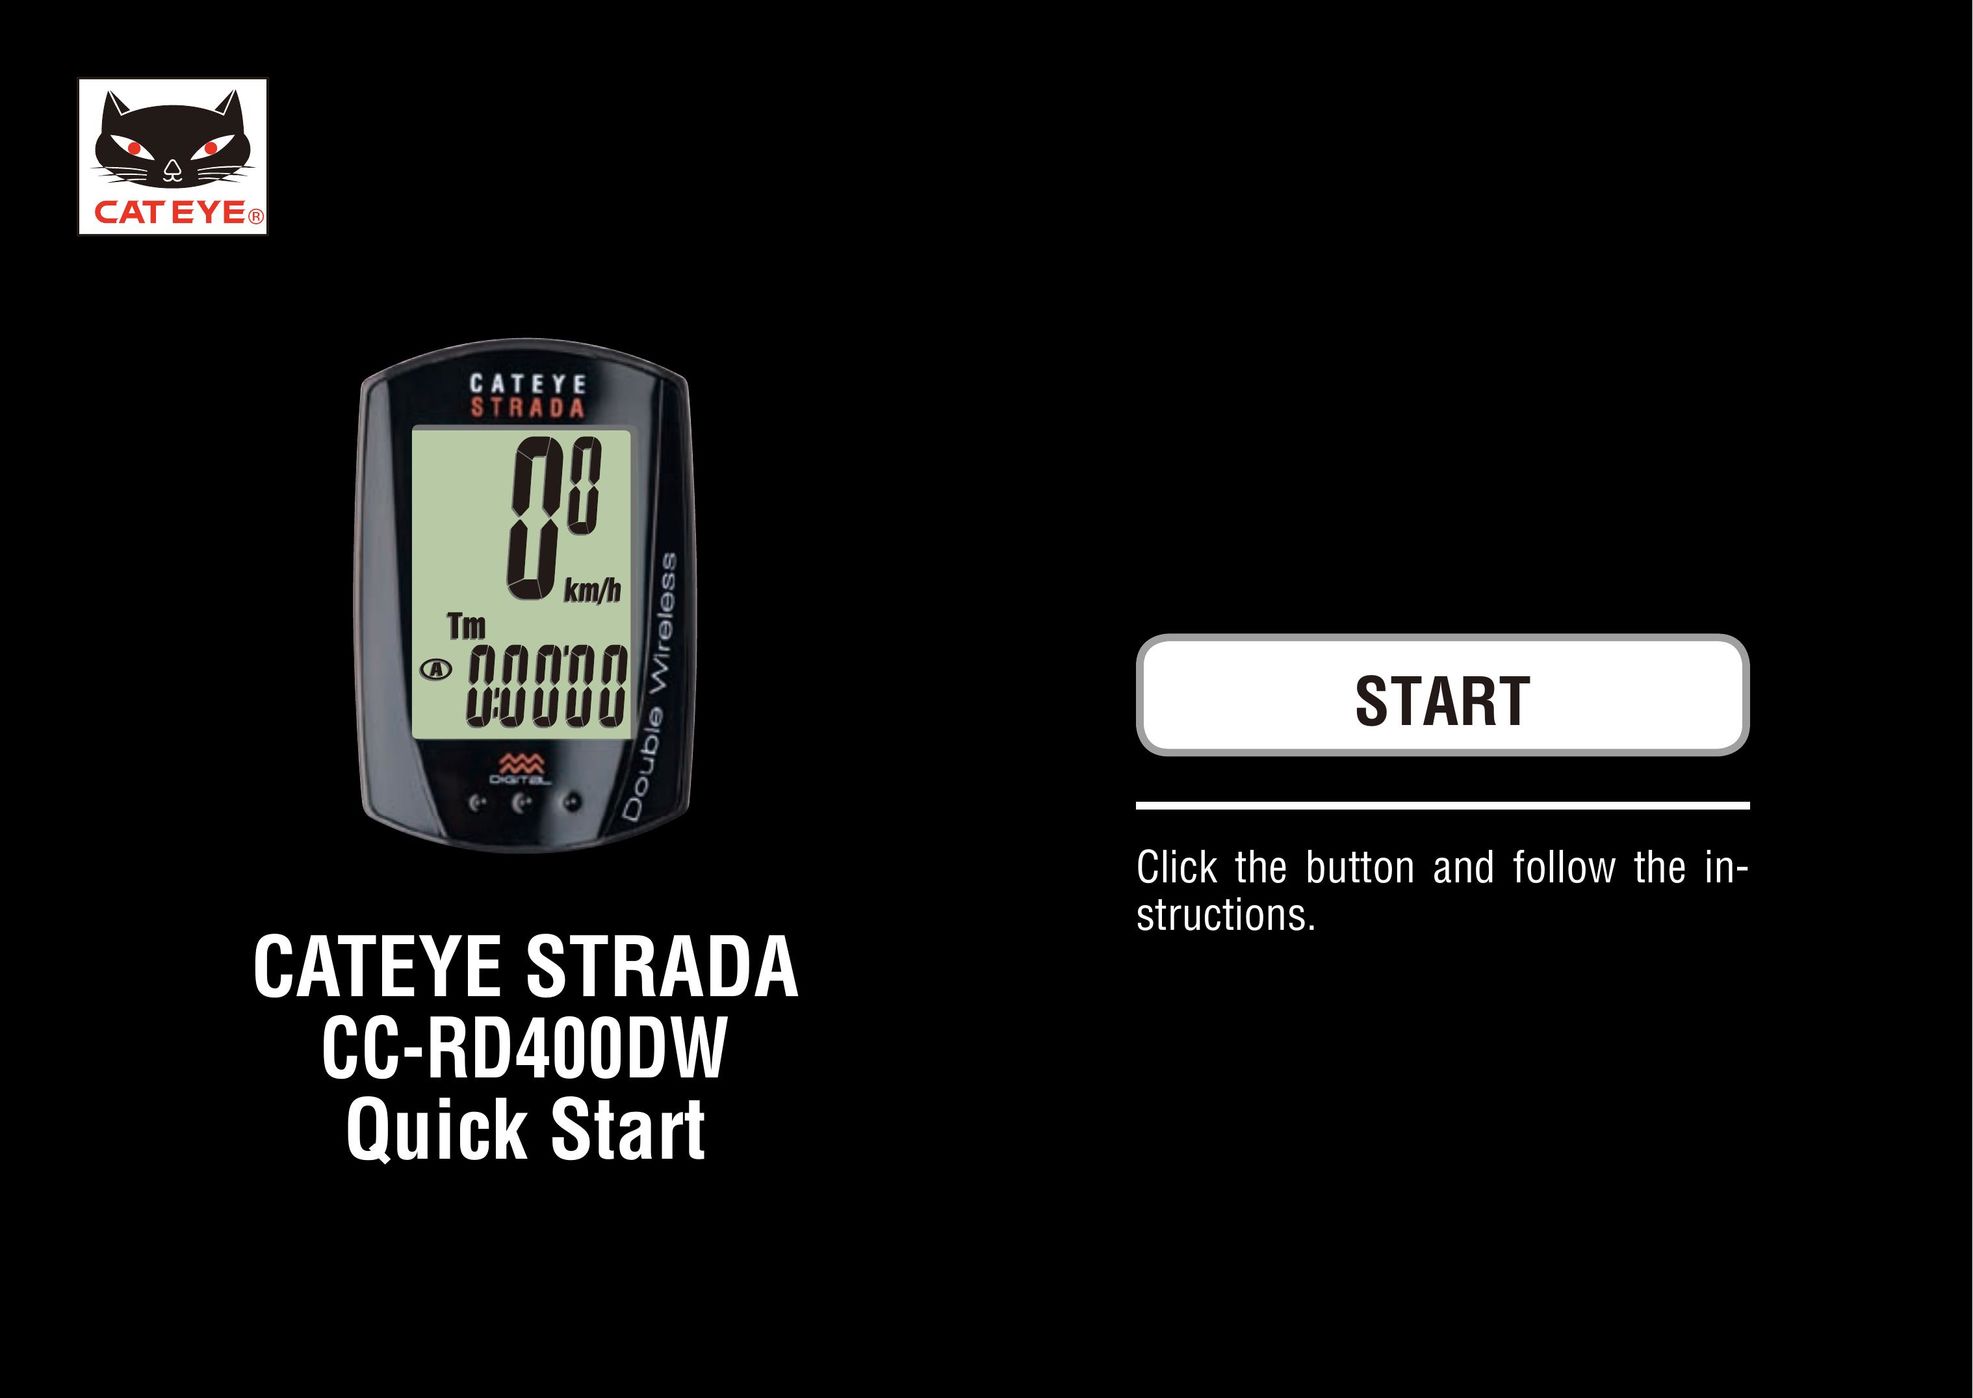 Cateye CC-RD400DW Cyclometer User Manual